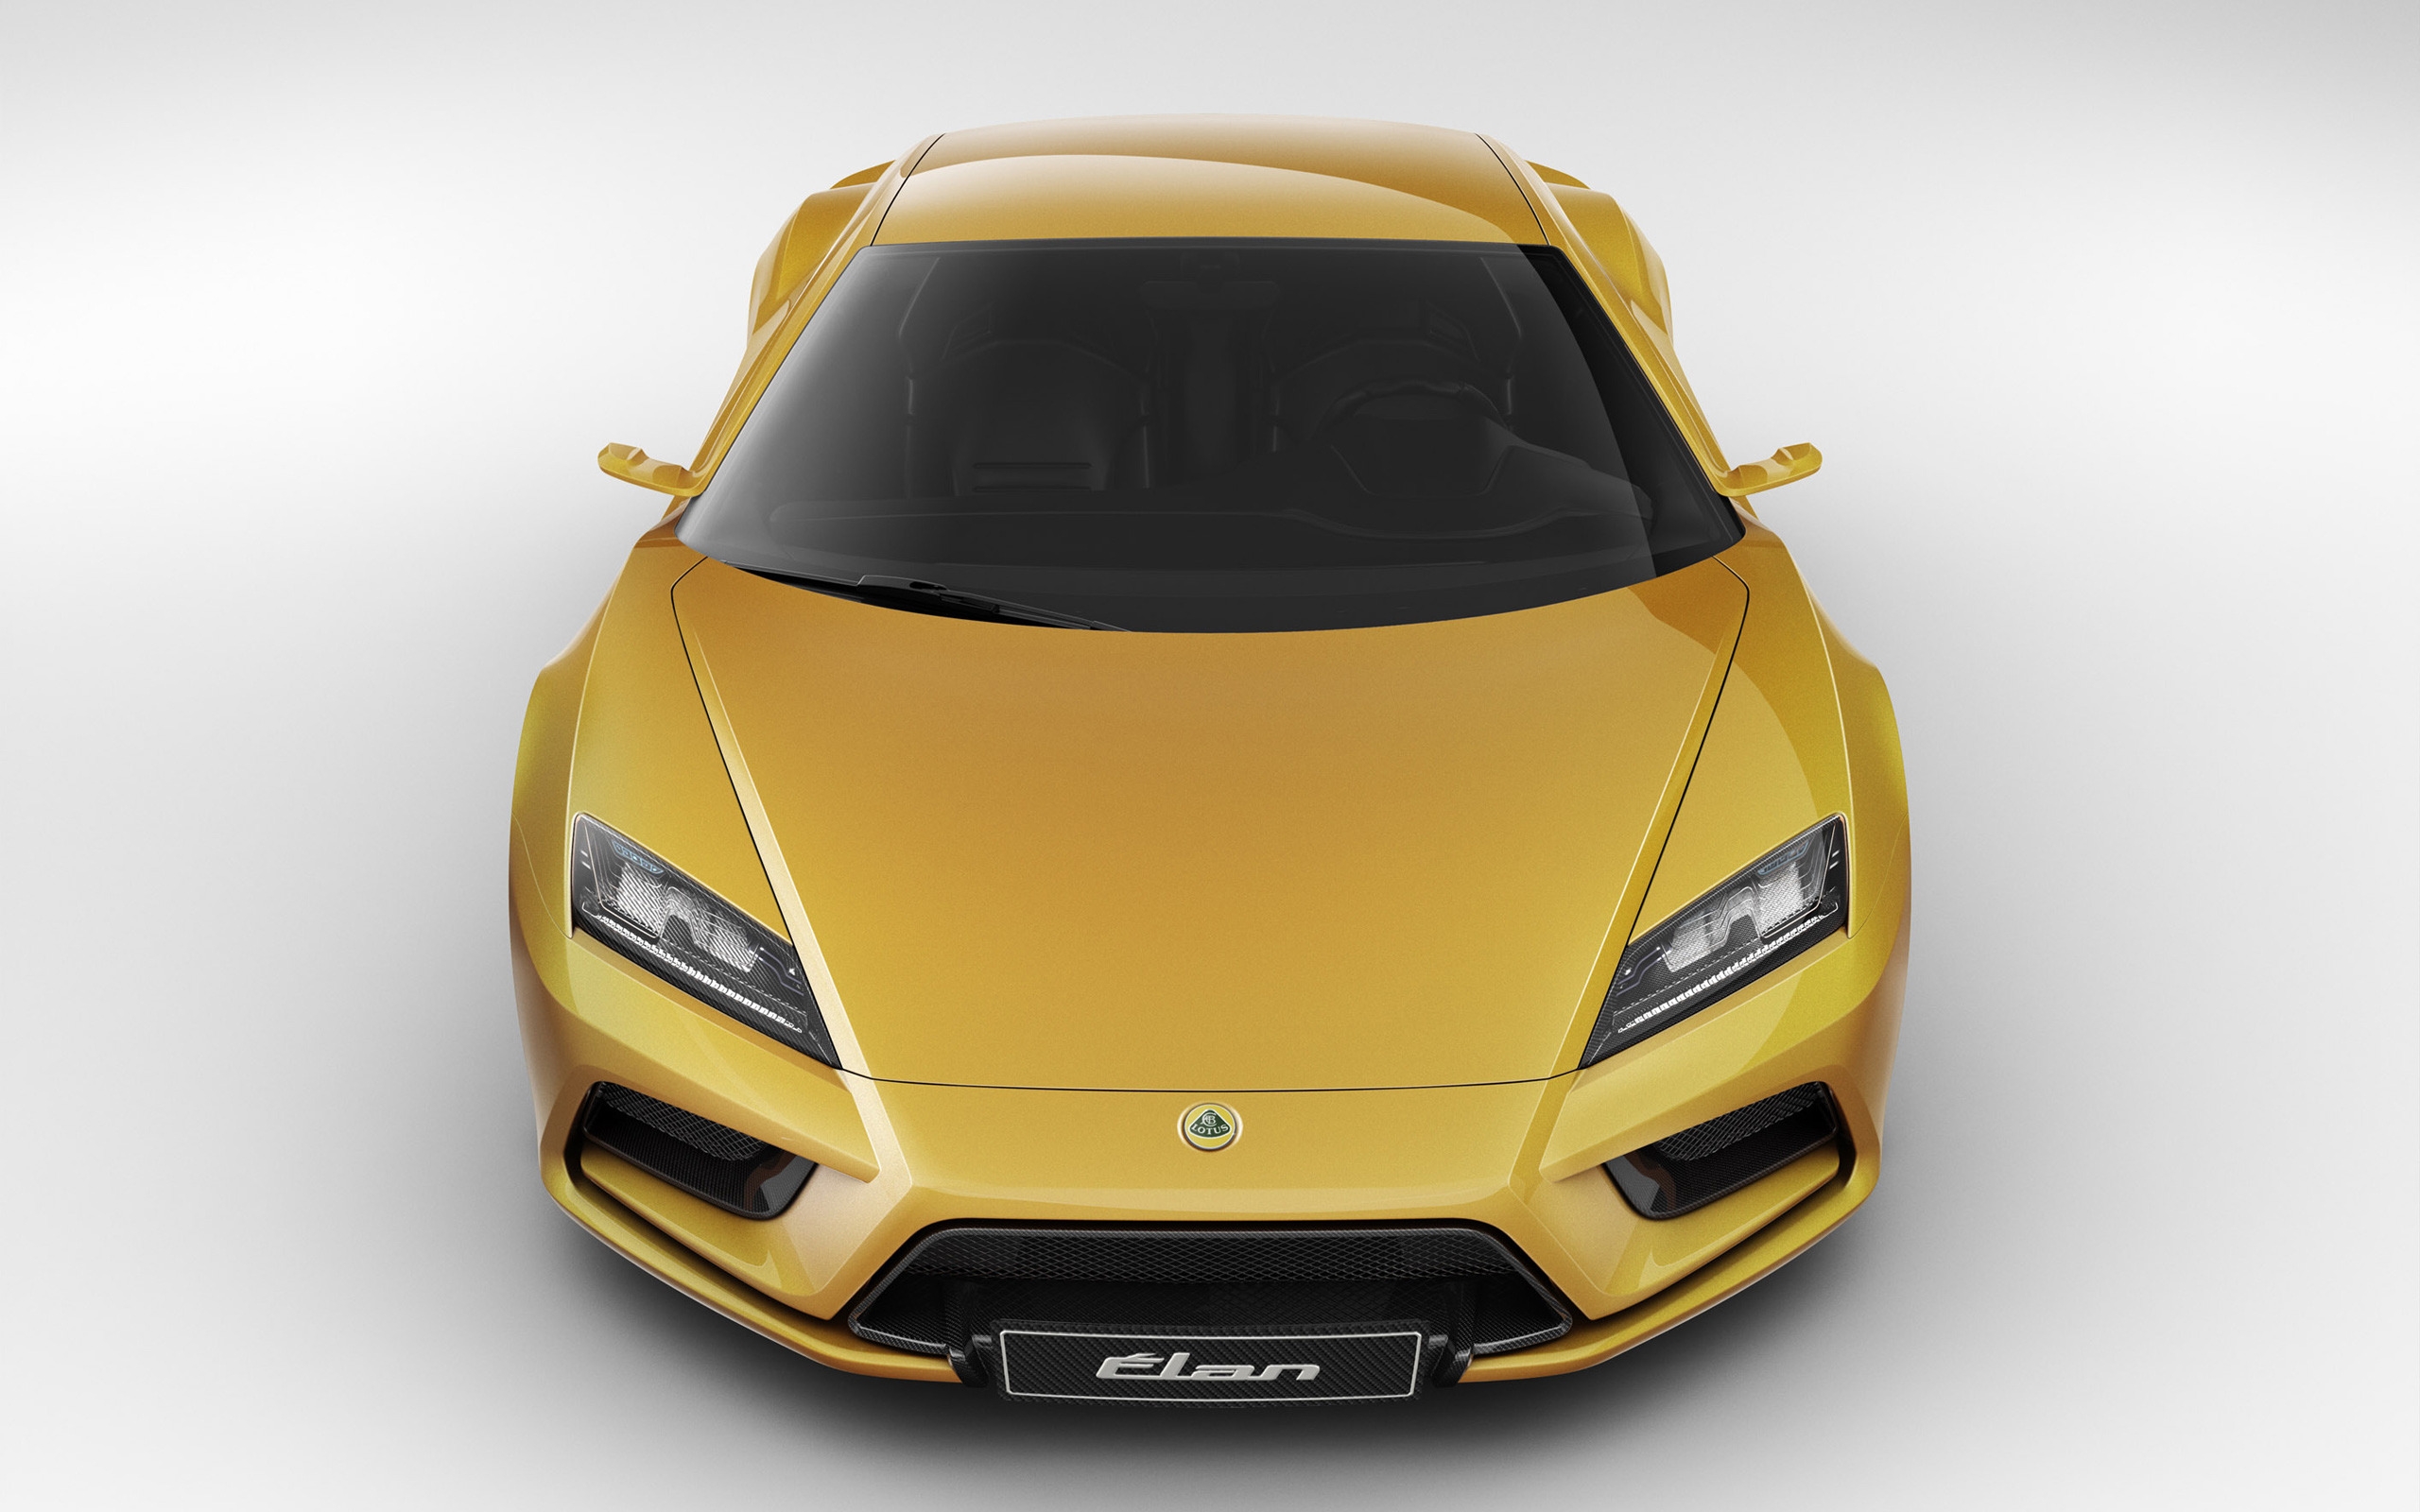 2013 Lotus Elan Studio Front for 2560 x 1600 widescreen resolution